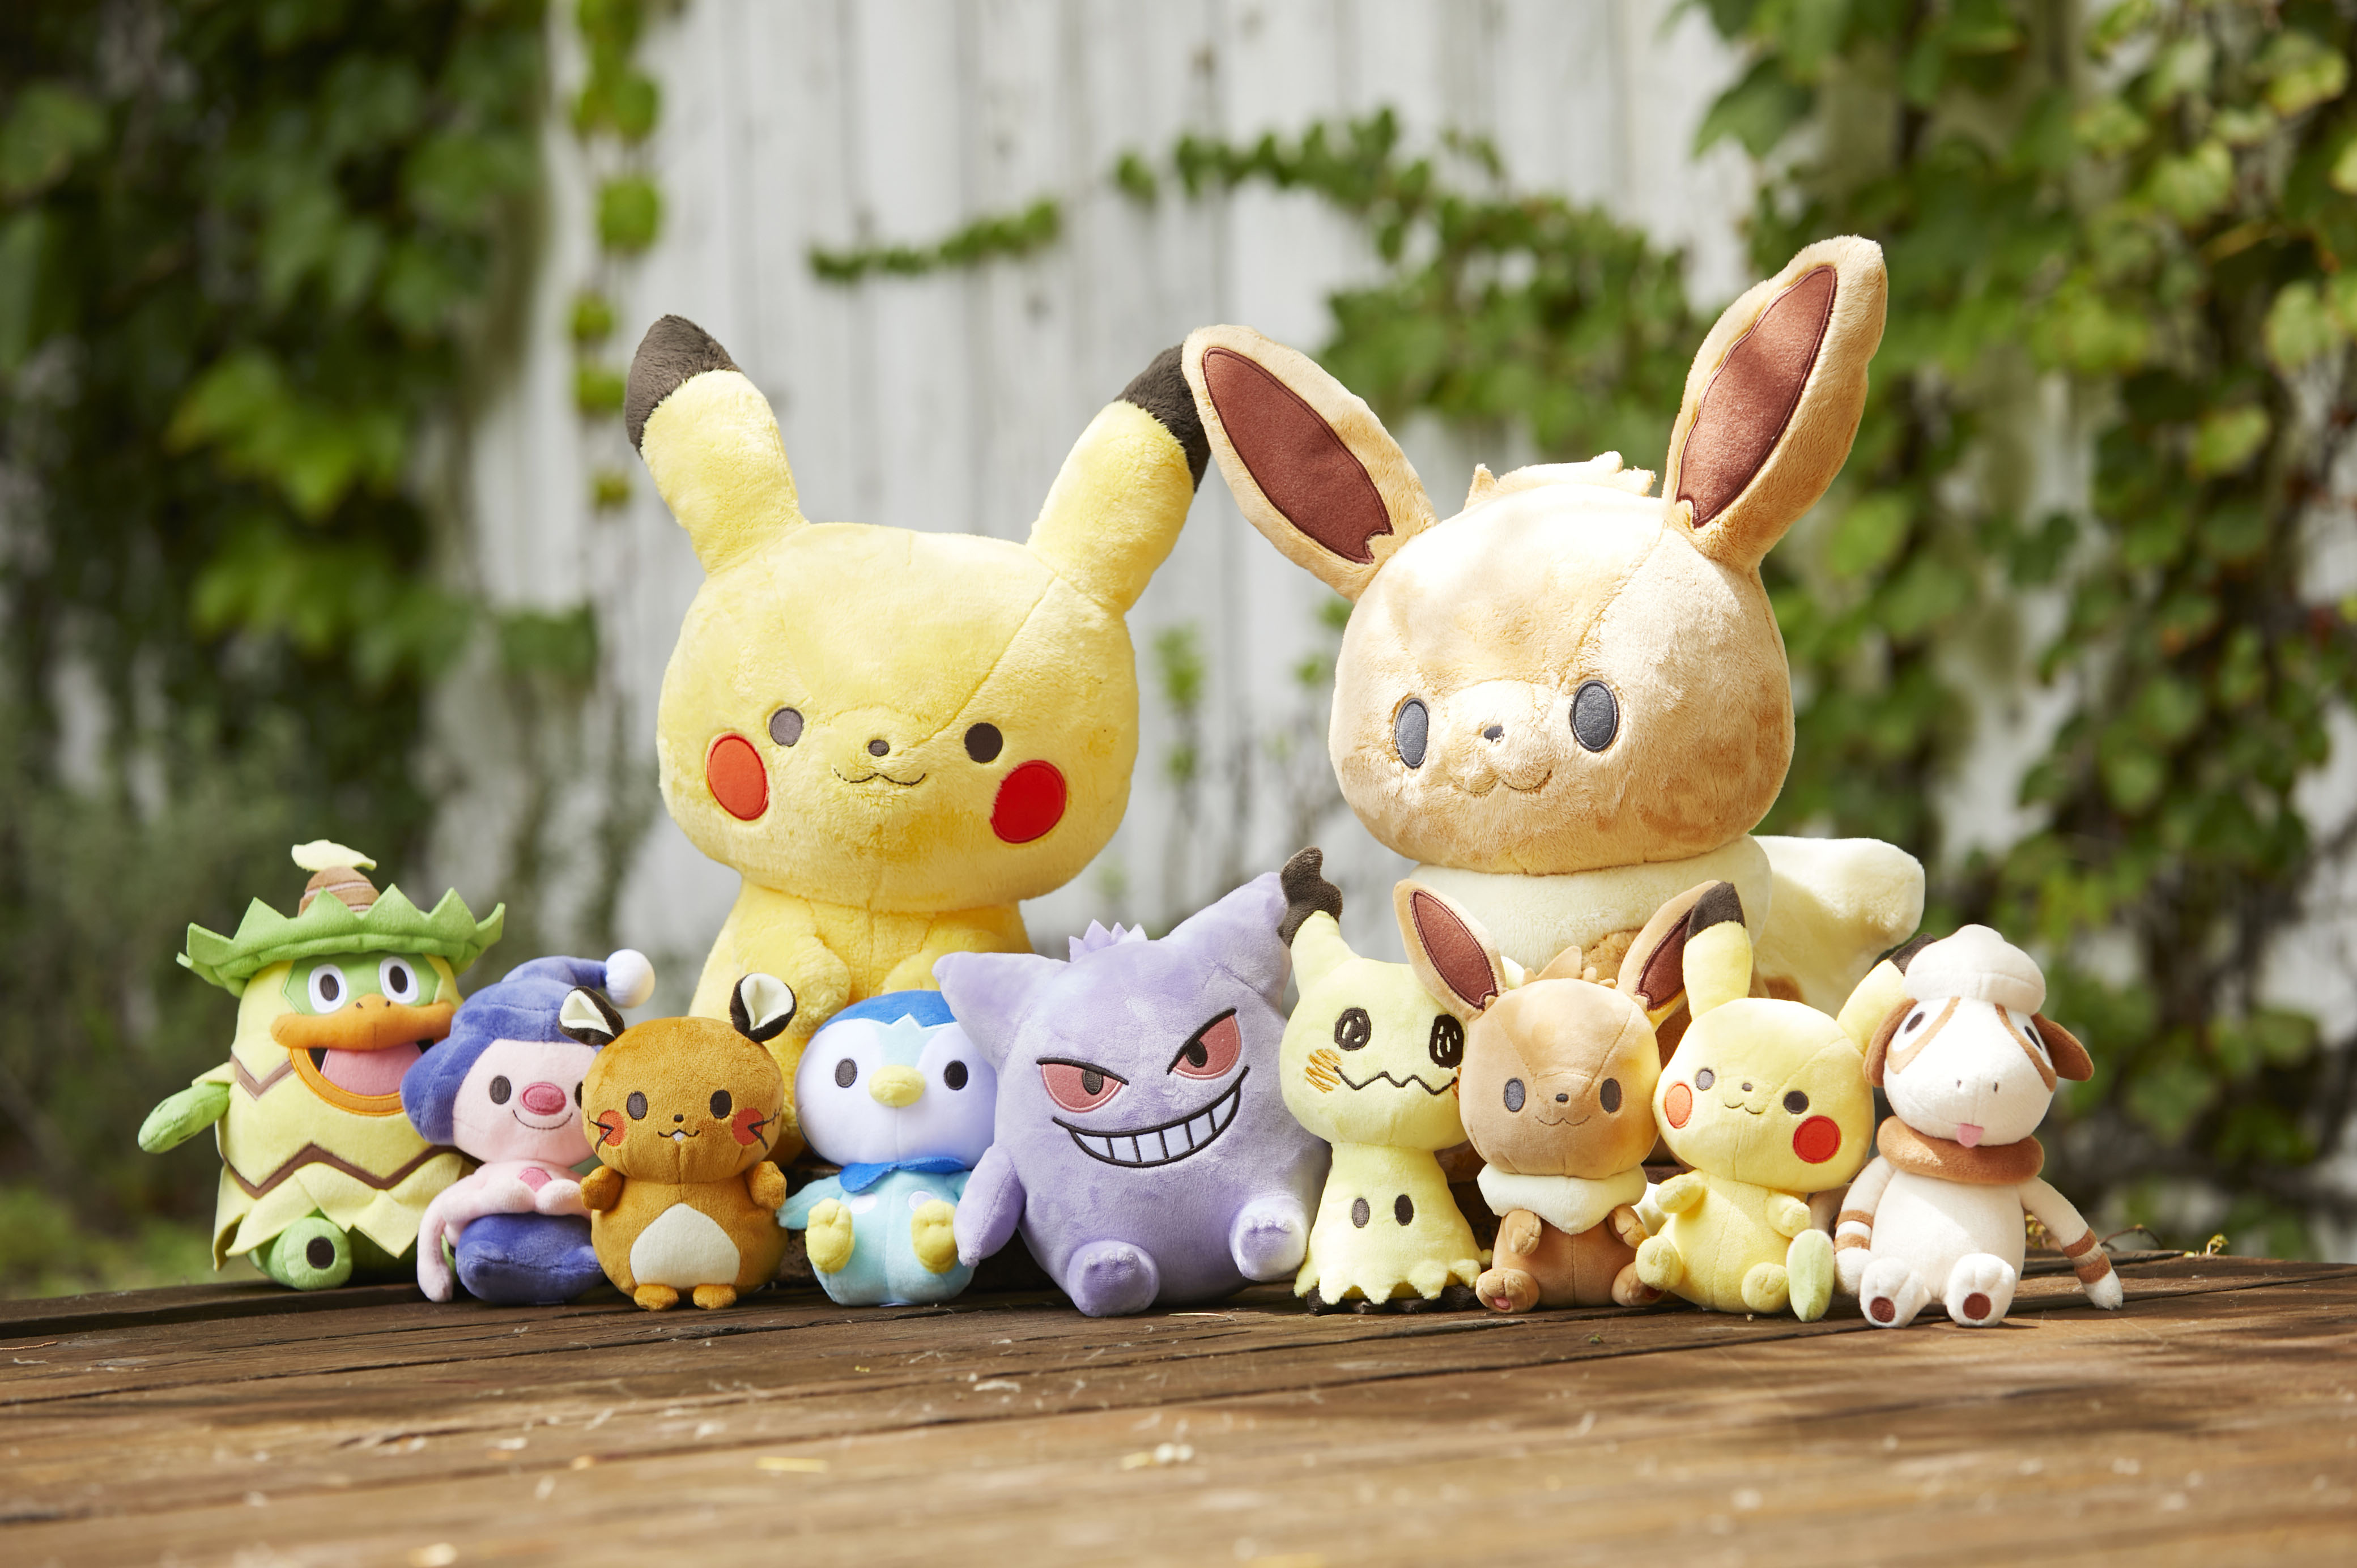 Official Pokemon Baby Brand Monpoke Reveals Autumn/Winter Collection, MOSHI MOSHI NIPPON